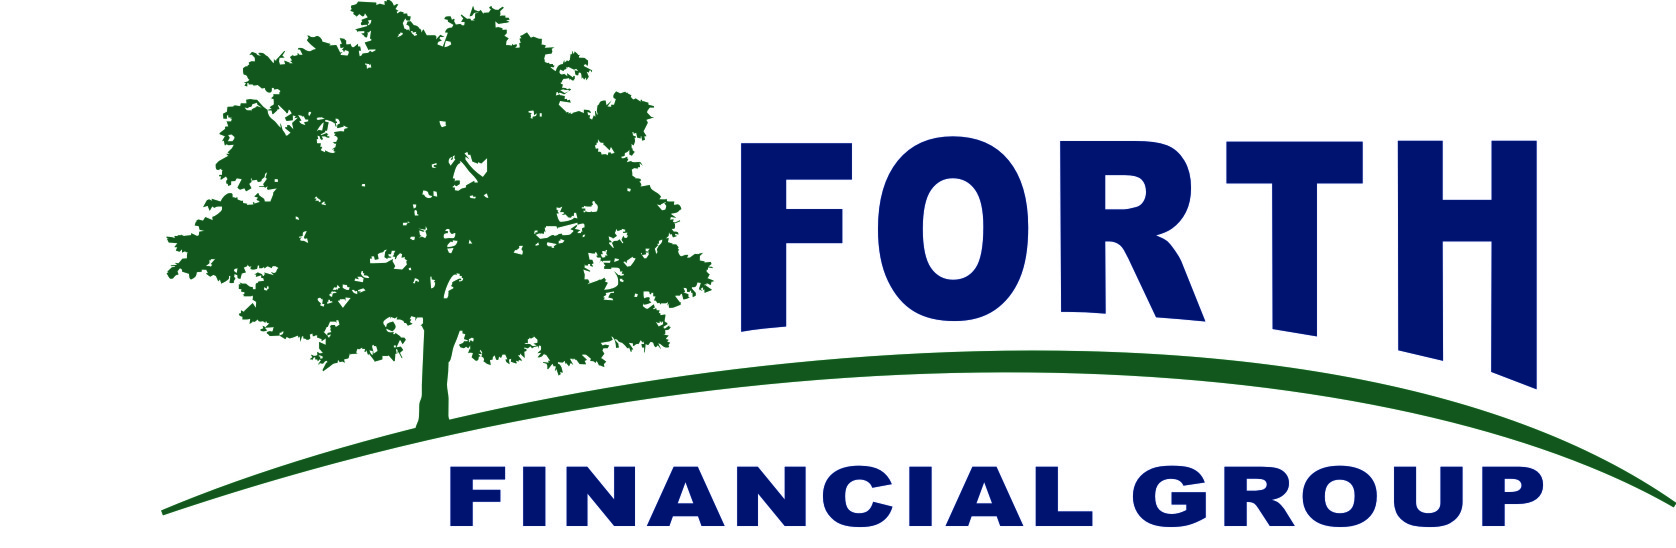 Forth Financial